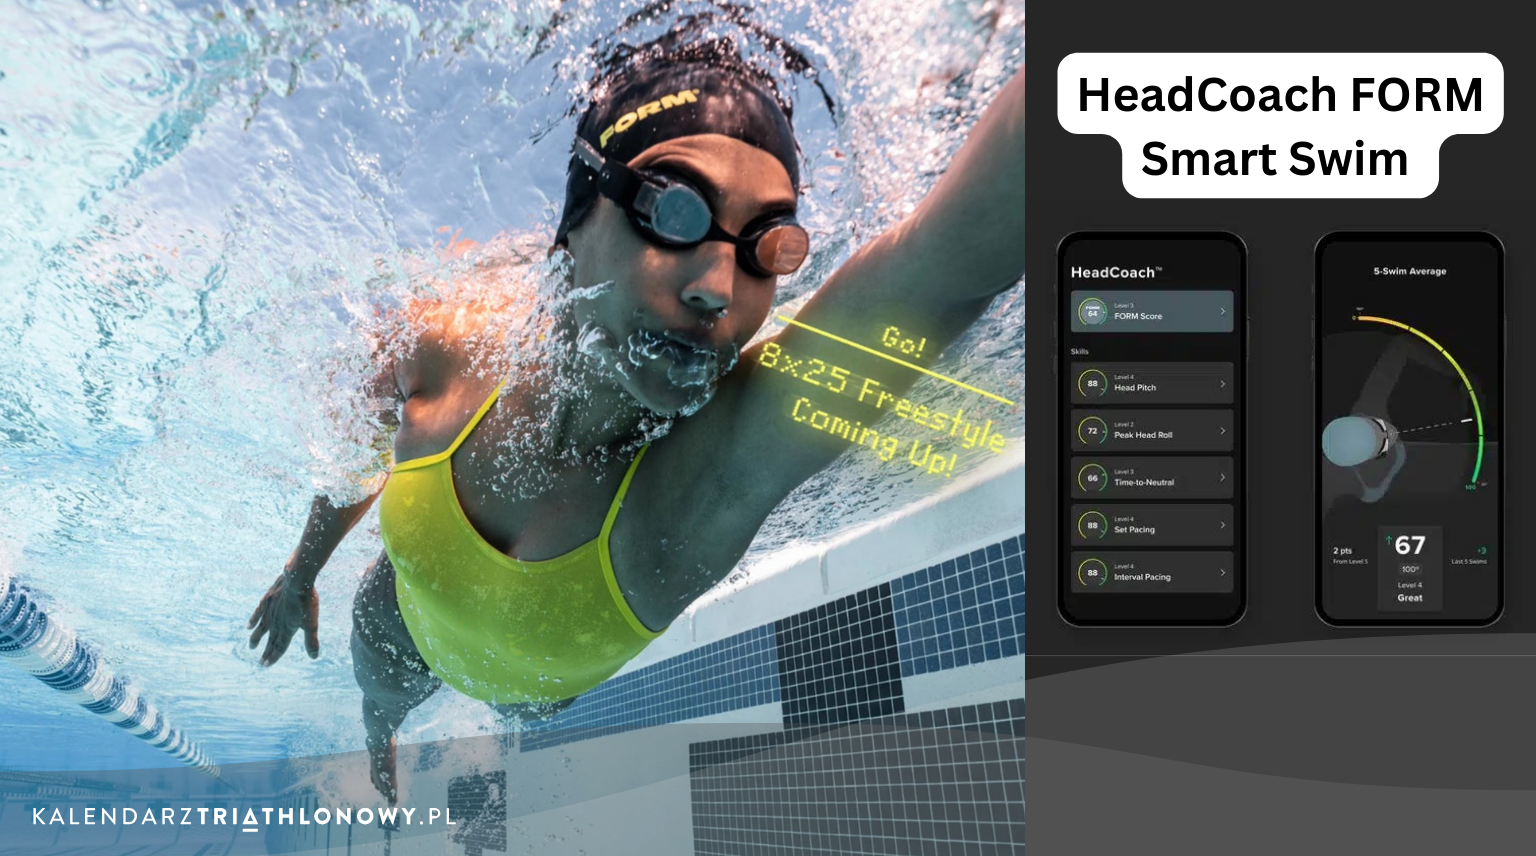 HeadCoach Form Smart Swim Googles